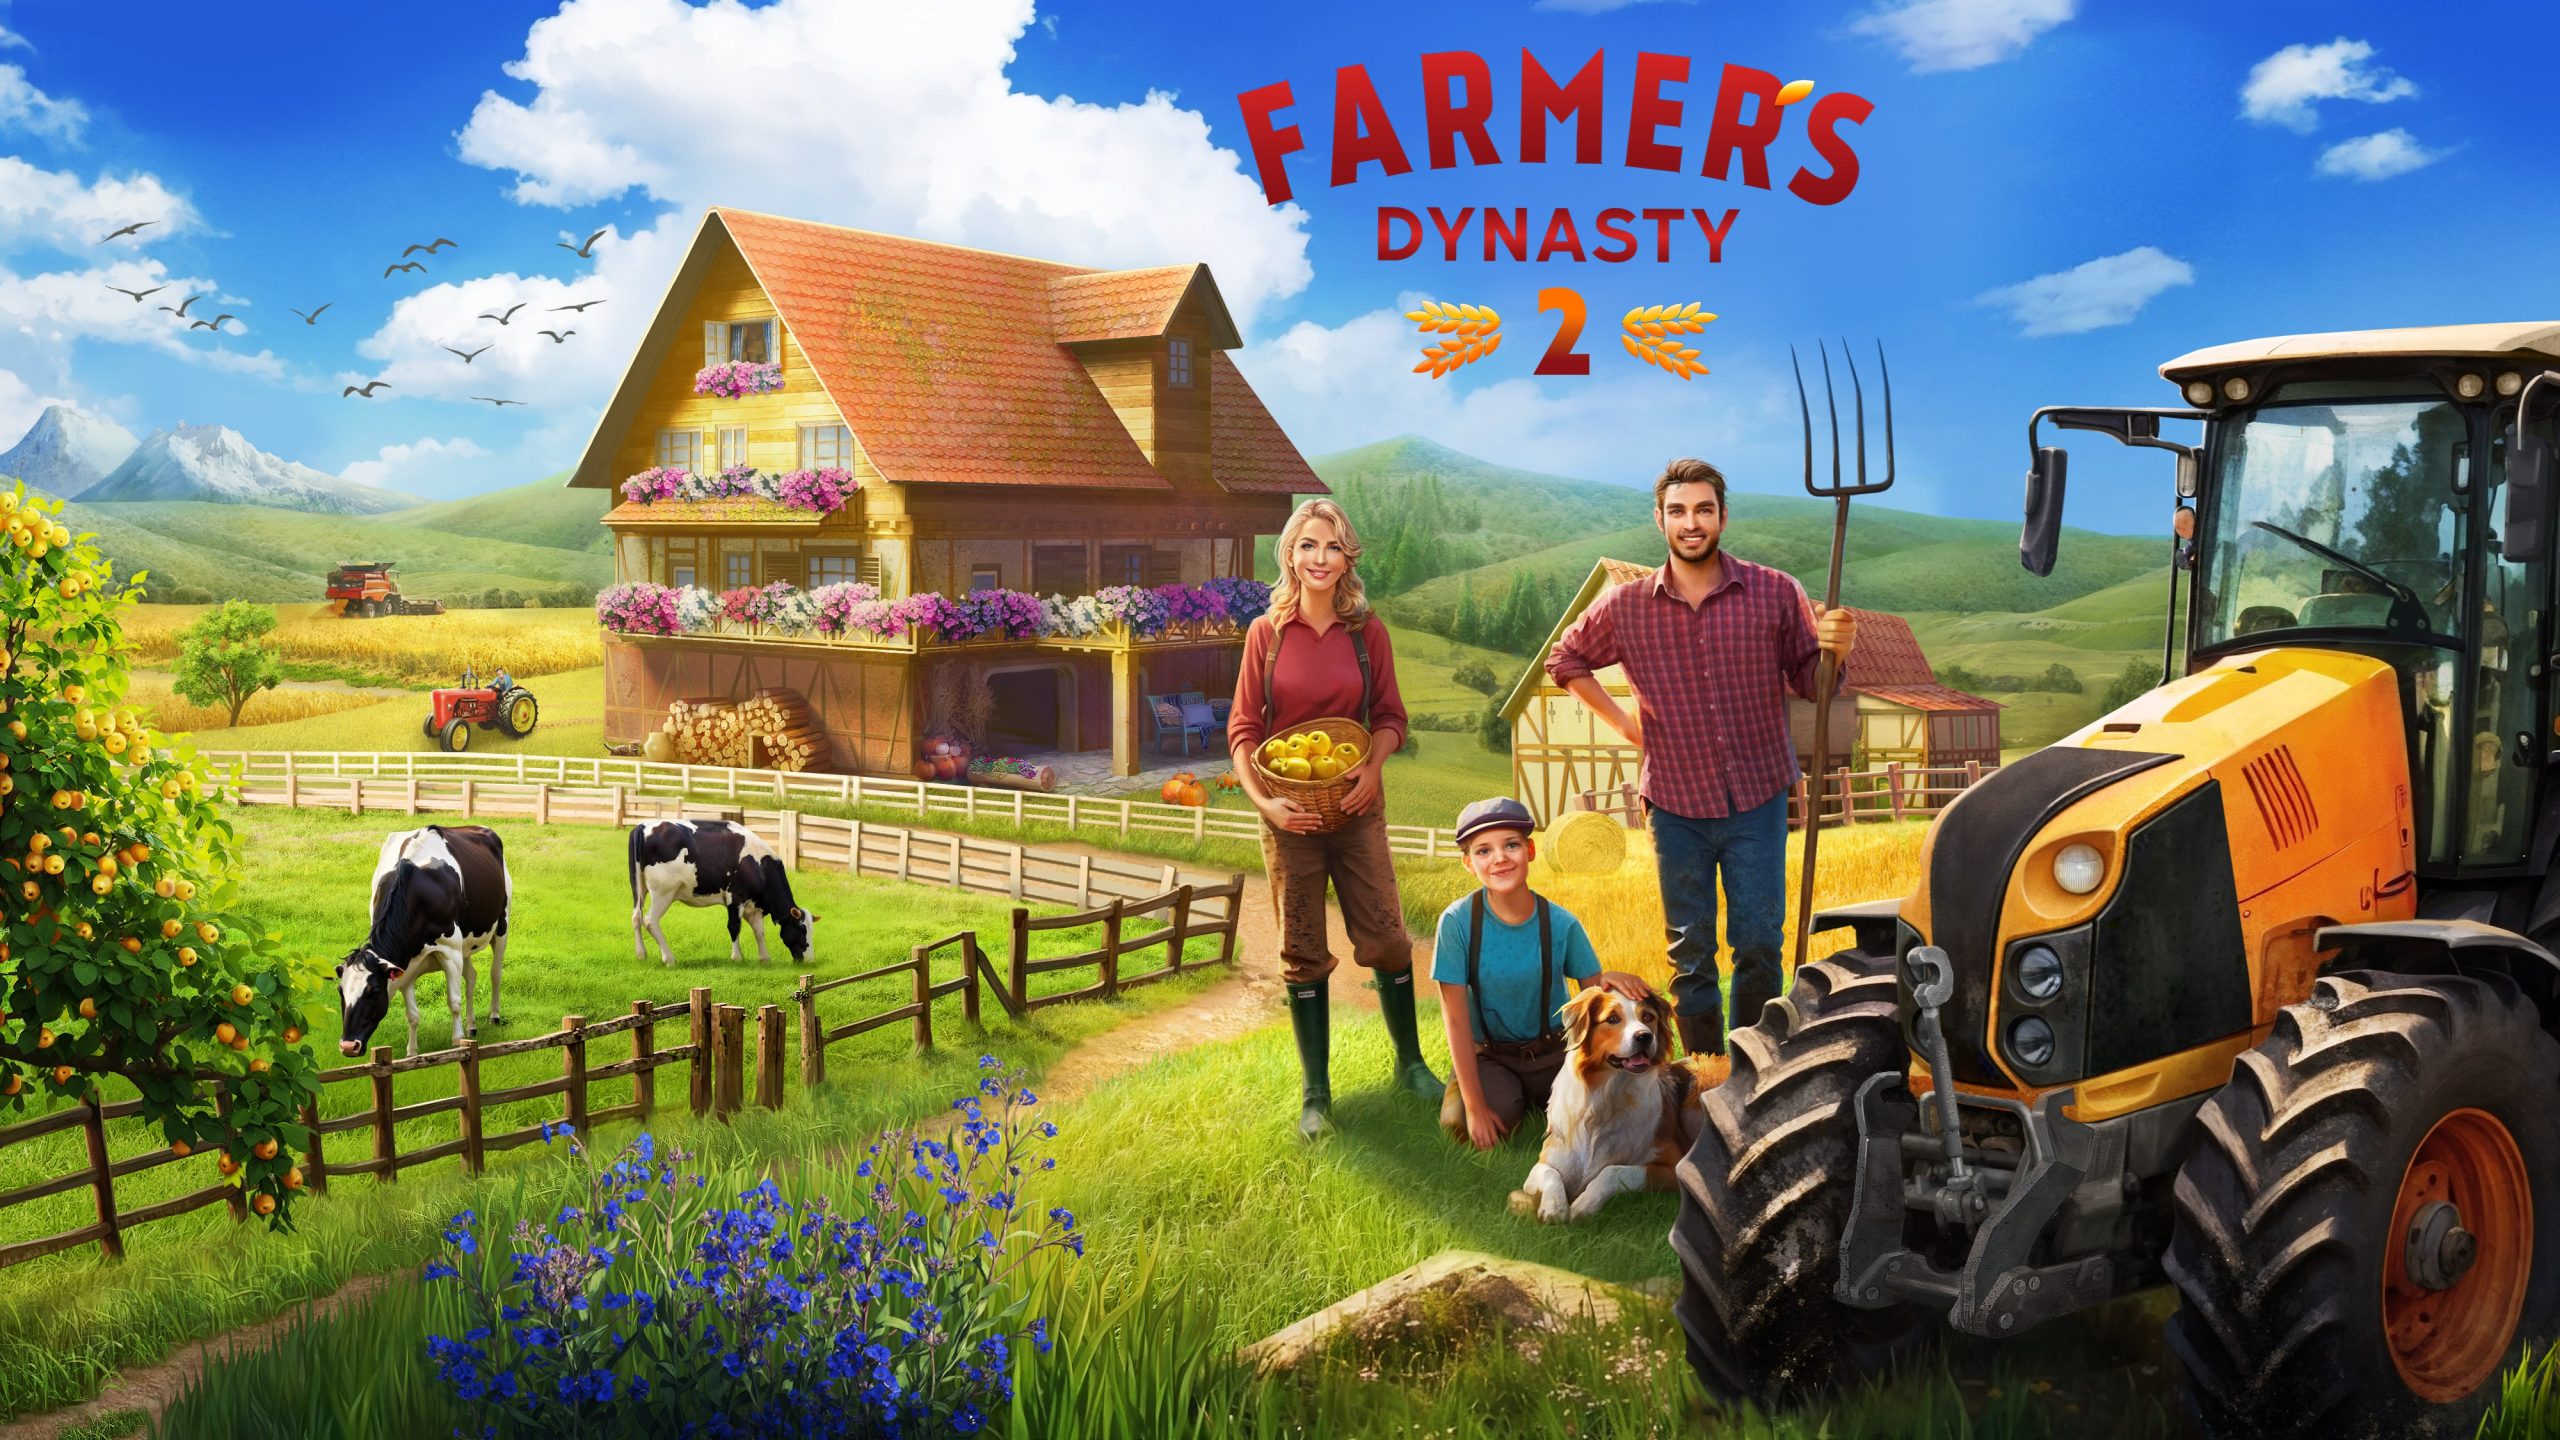 Farming Simulator 23 - Farmer 2.0 Free Download